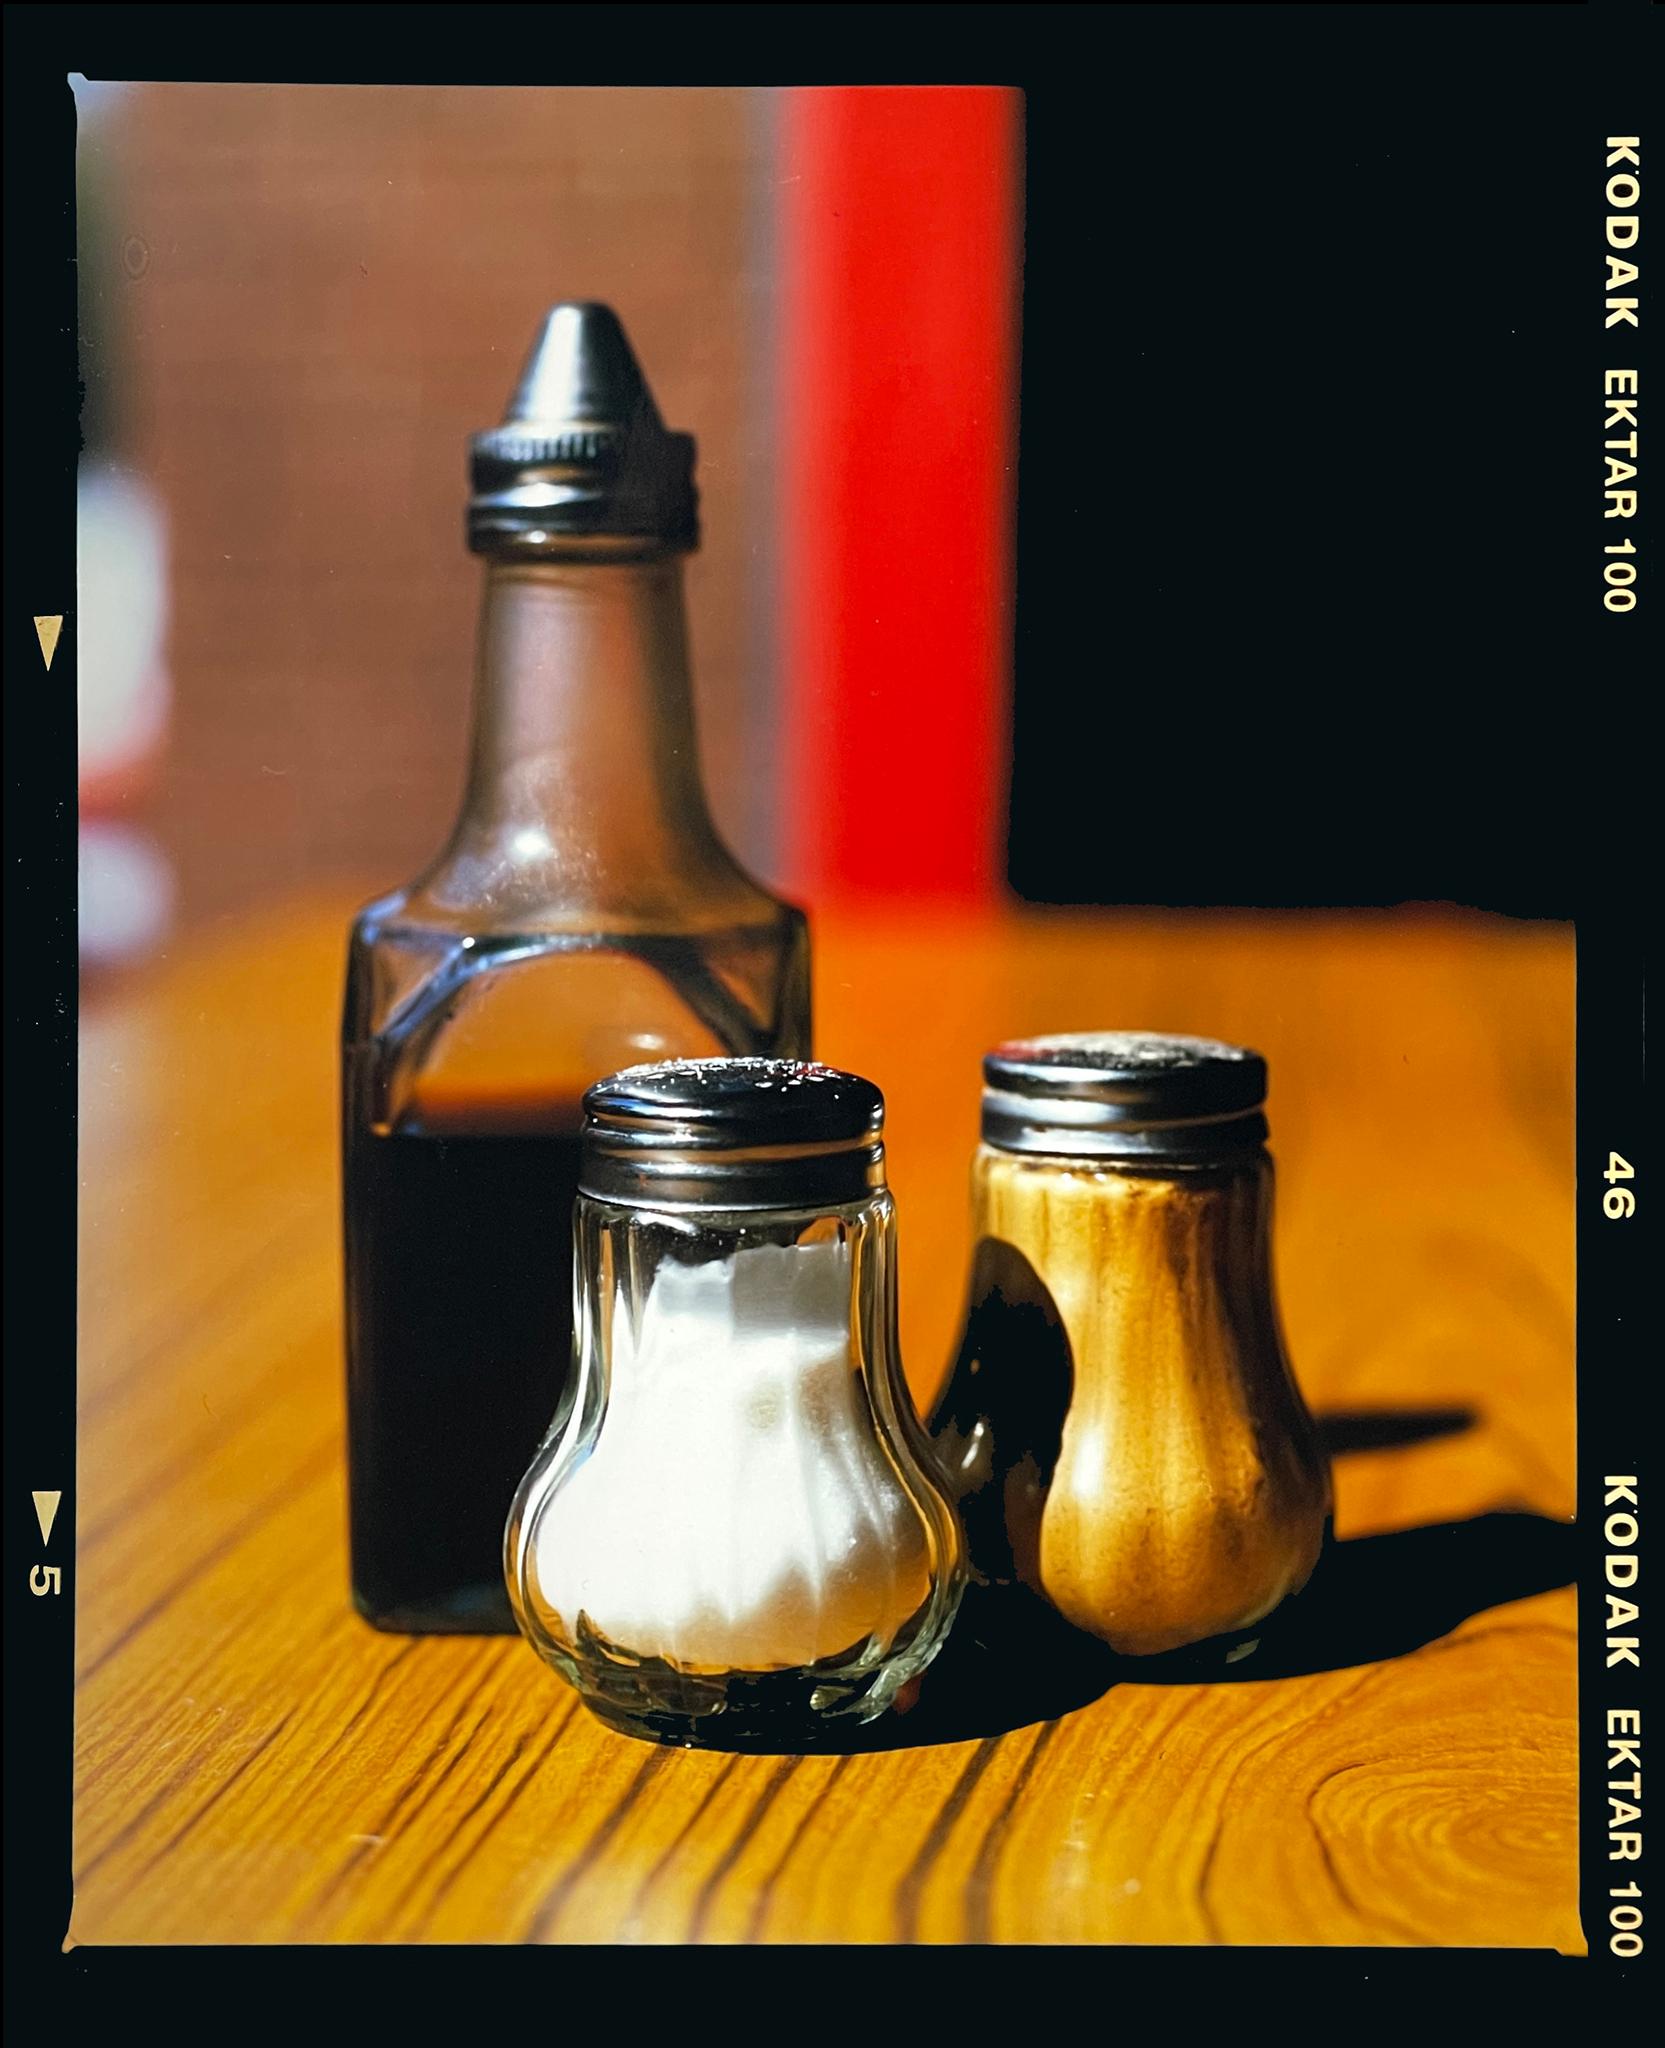 Richard Heeps Still-Life Photograph - Salt, Pepper & Vinegar, Clacton-on-Sea - Still Life Color Photography